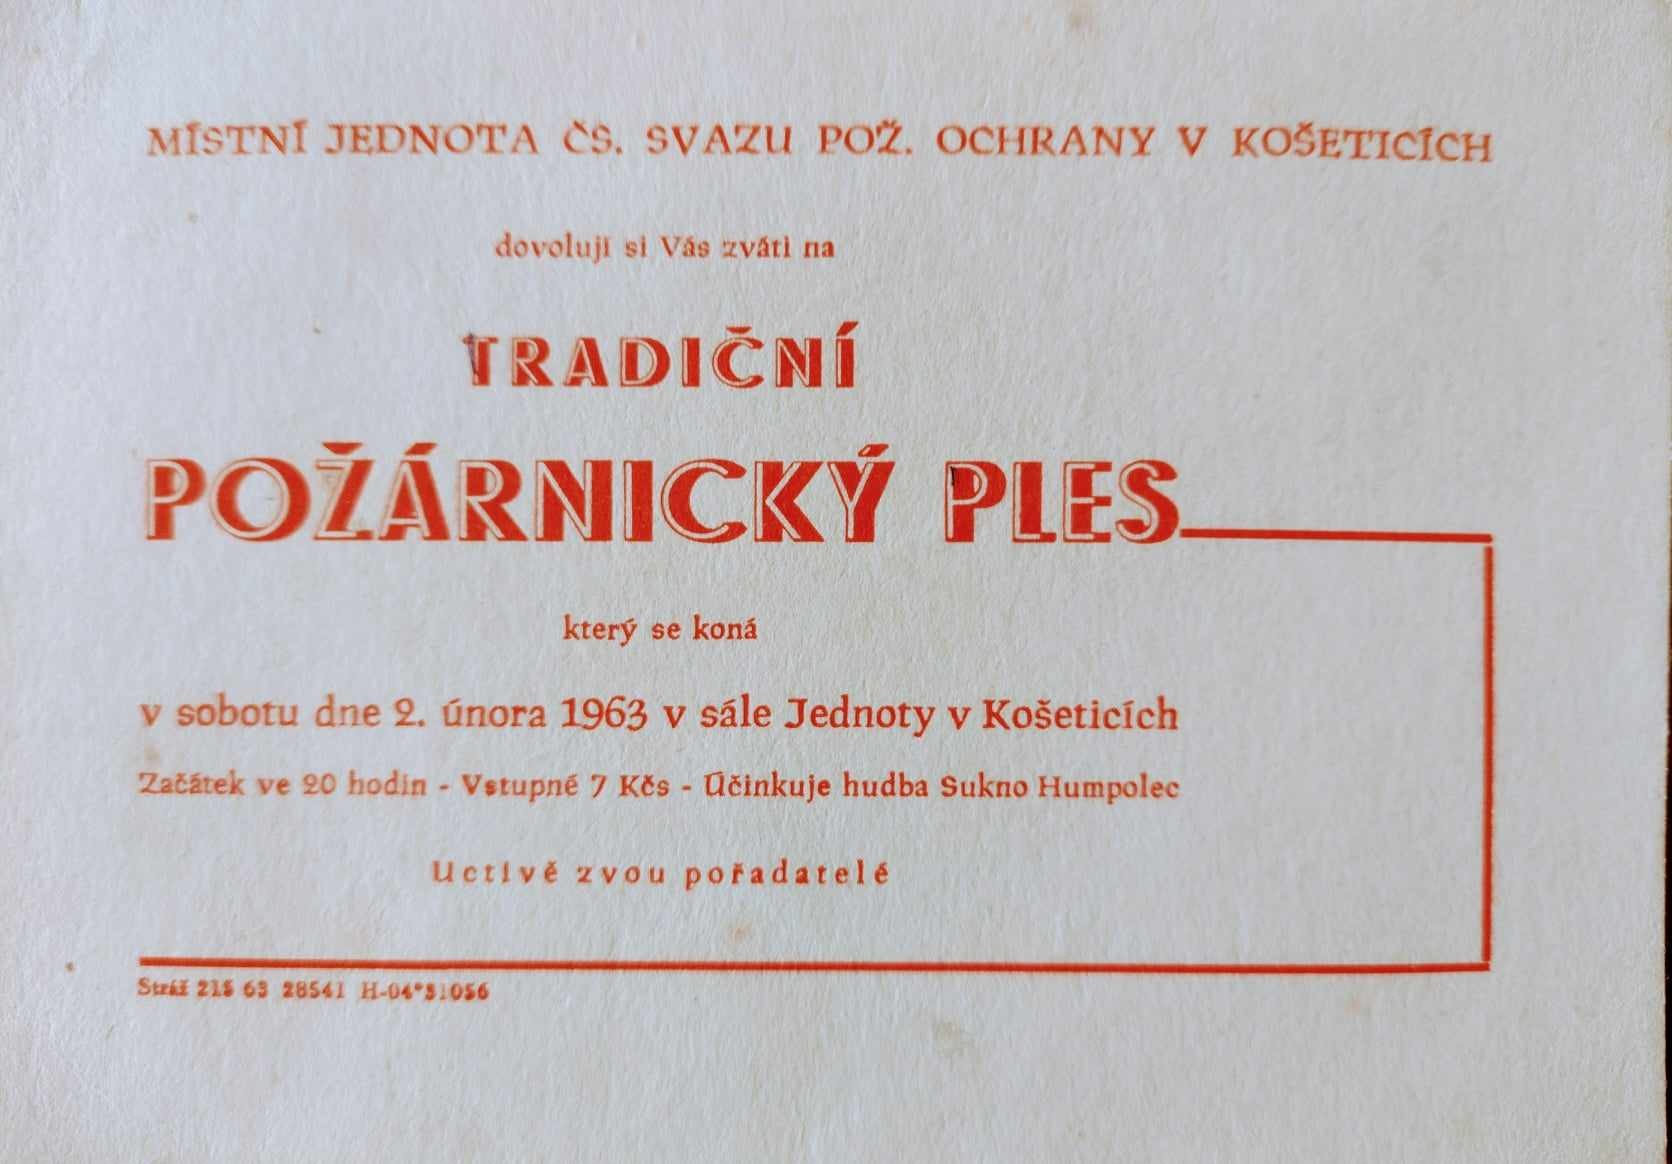 2.unora-1963_pozvanka-na-pozarnicky-ples.jpg